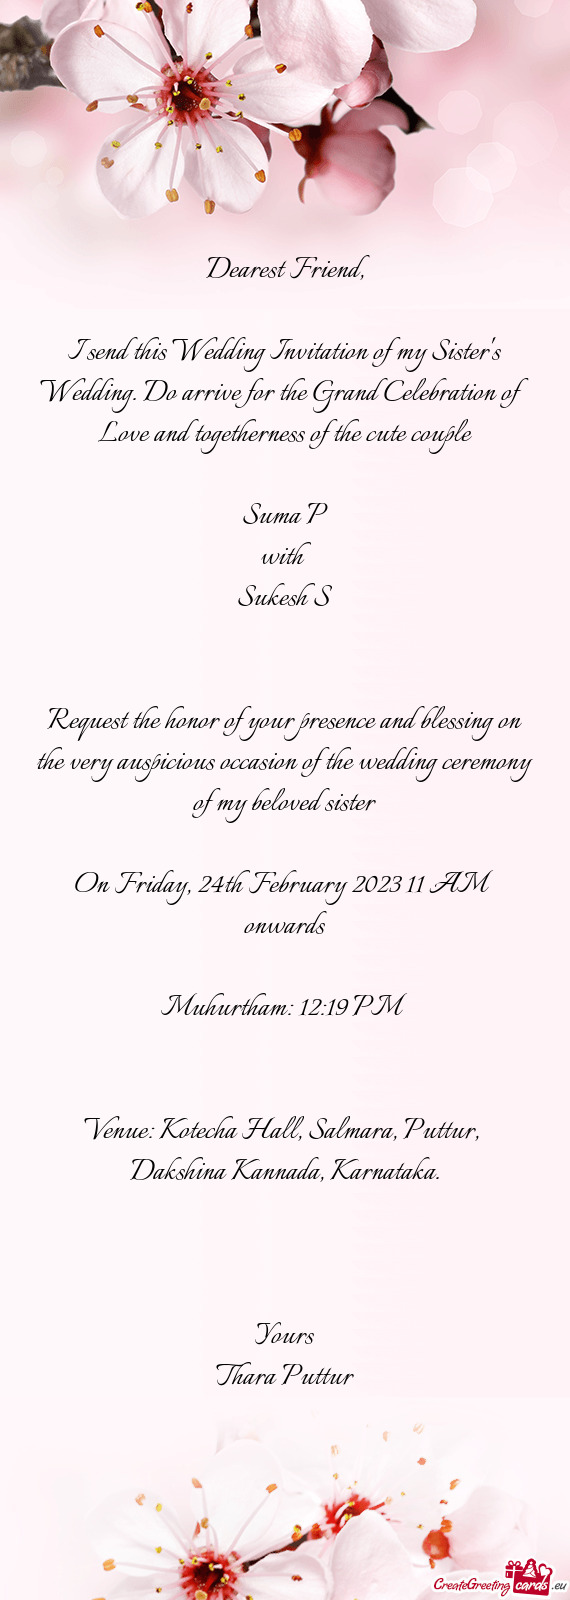 I send this Wedding Invitation of my Sister